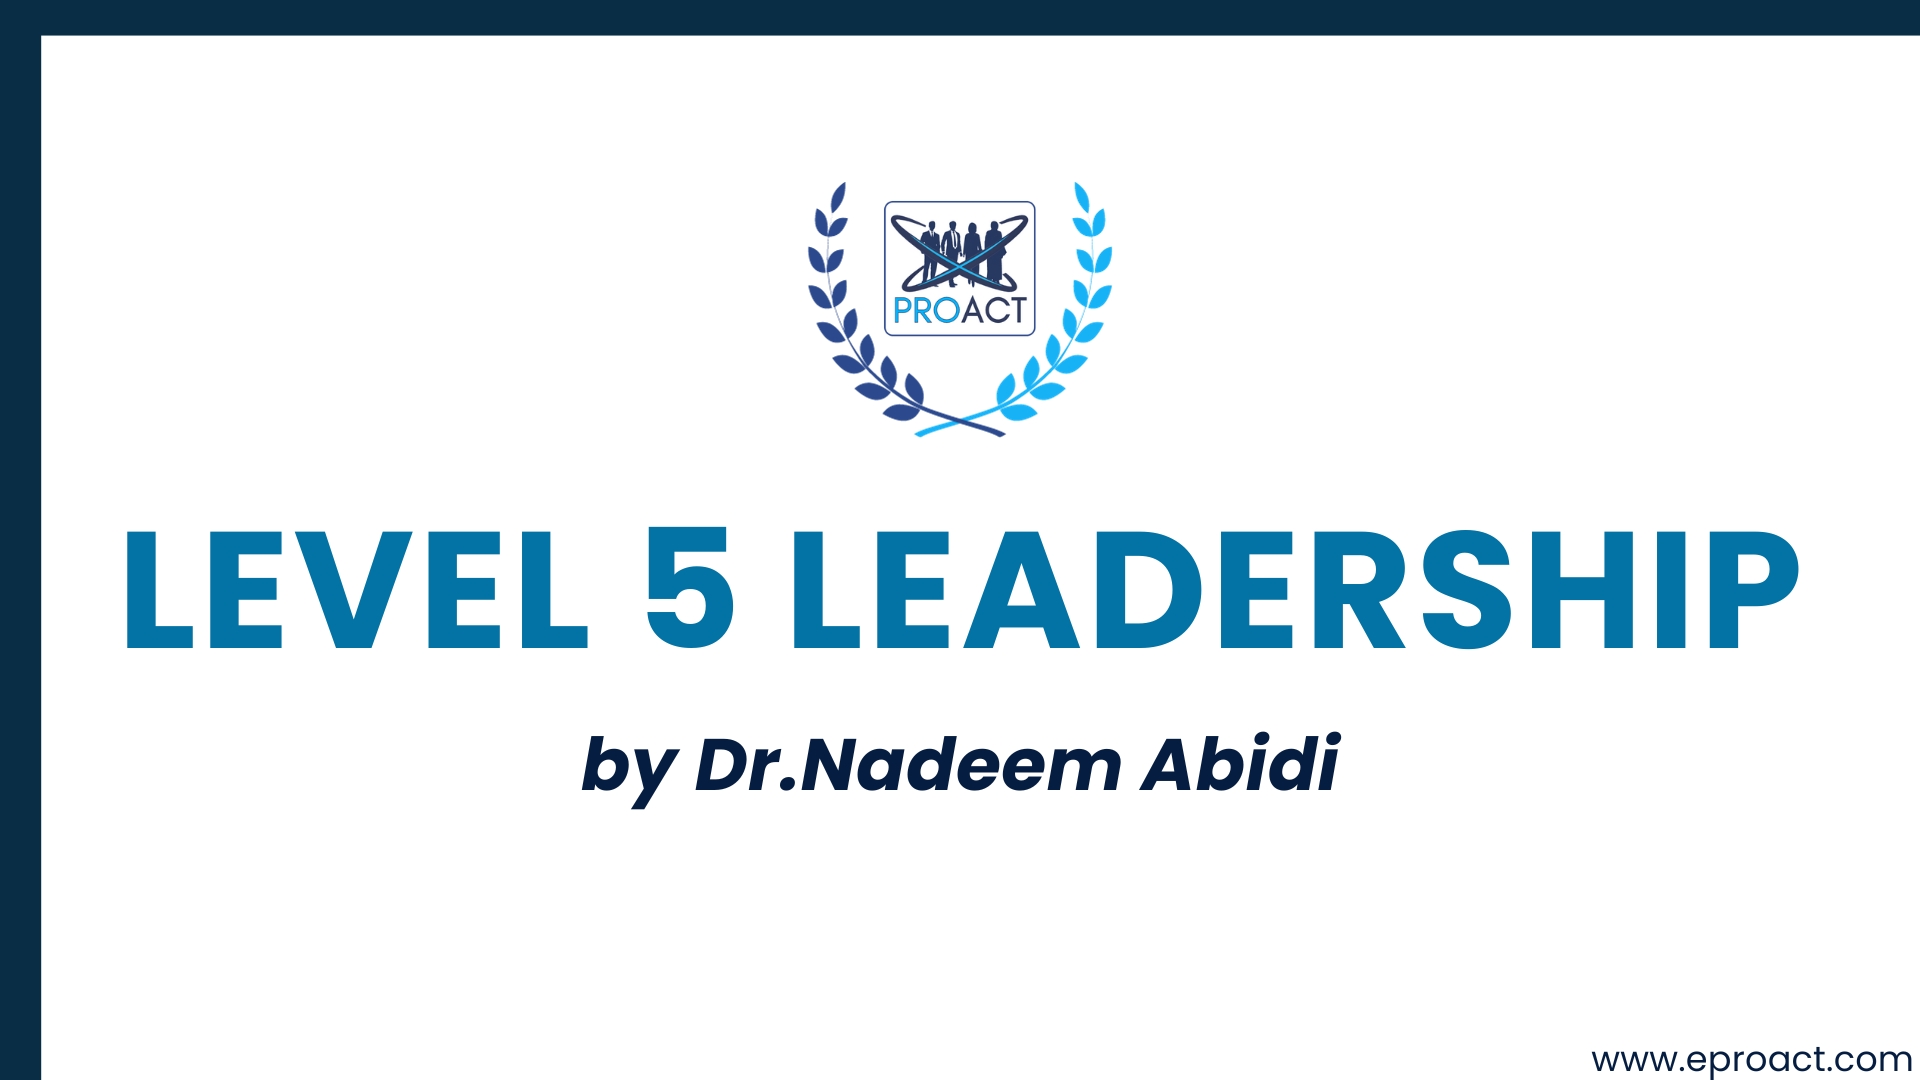 LEVEL 5 LEADERSHIP by Dr. NADEEM ABIDI